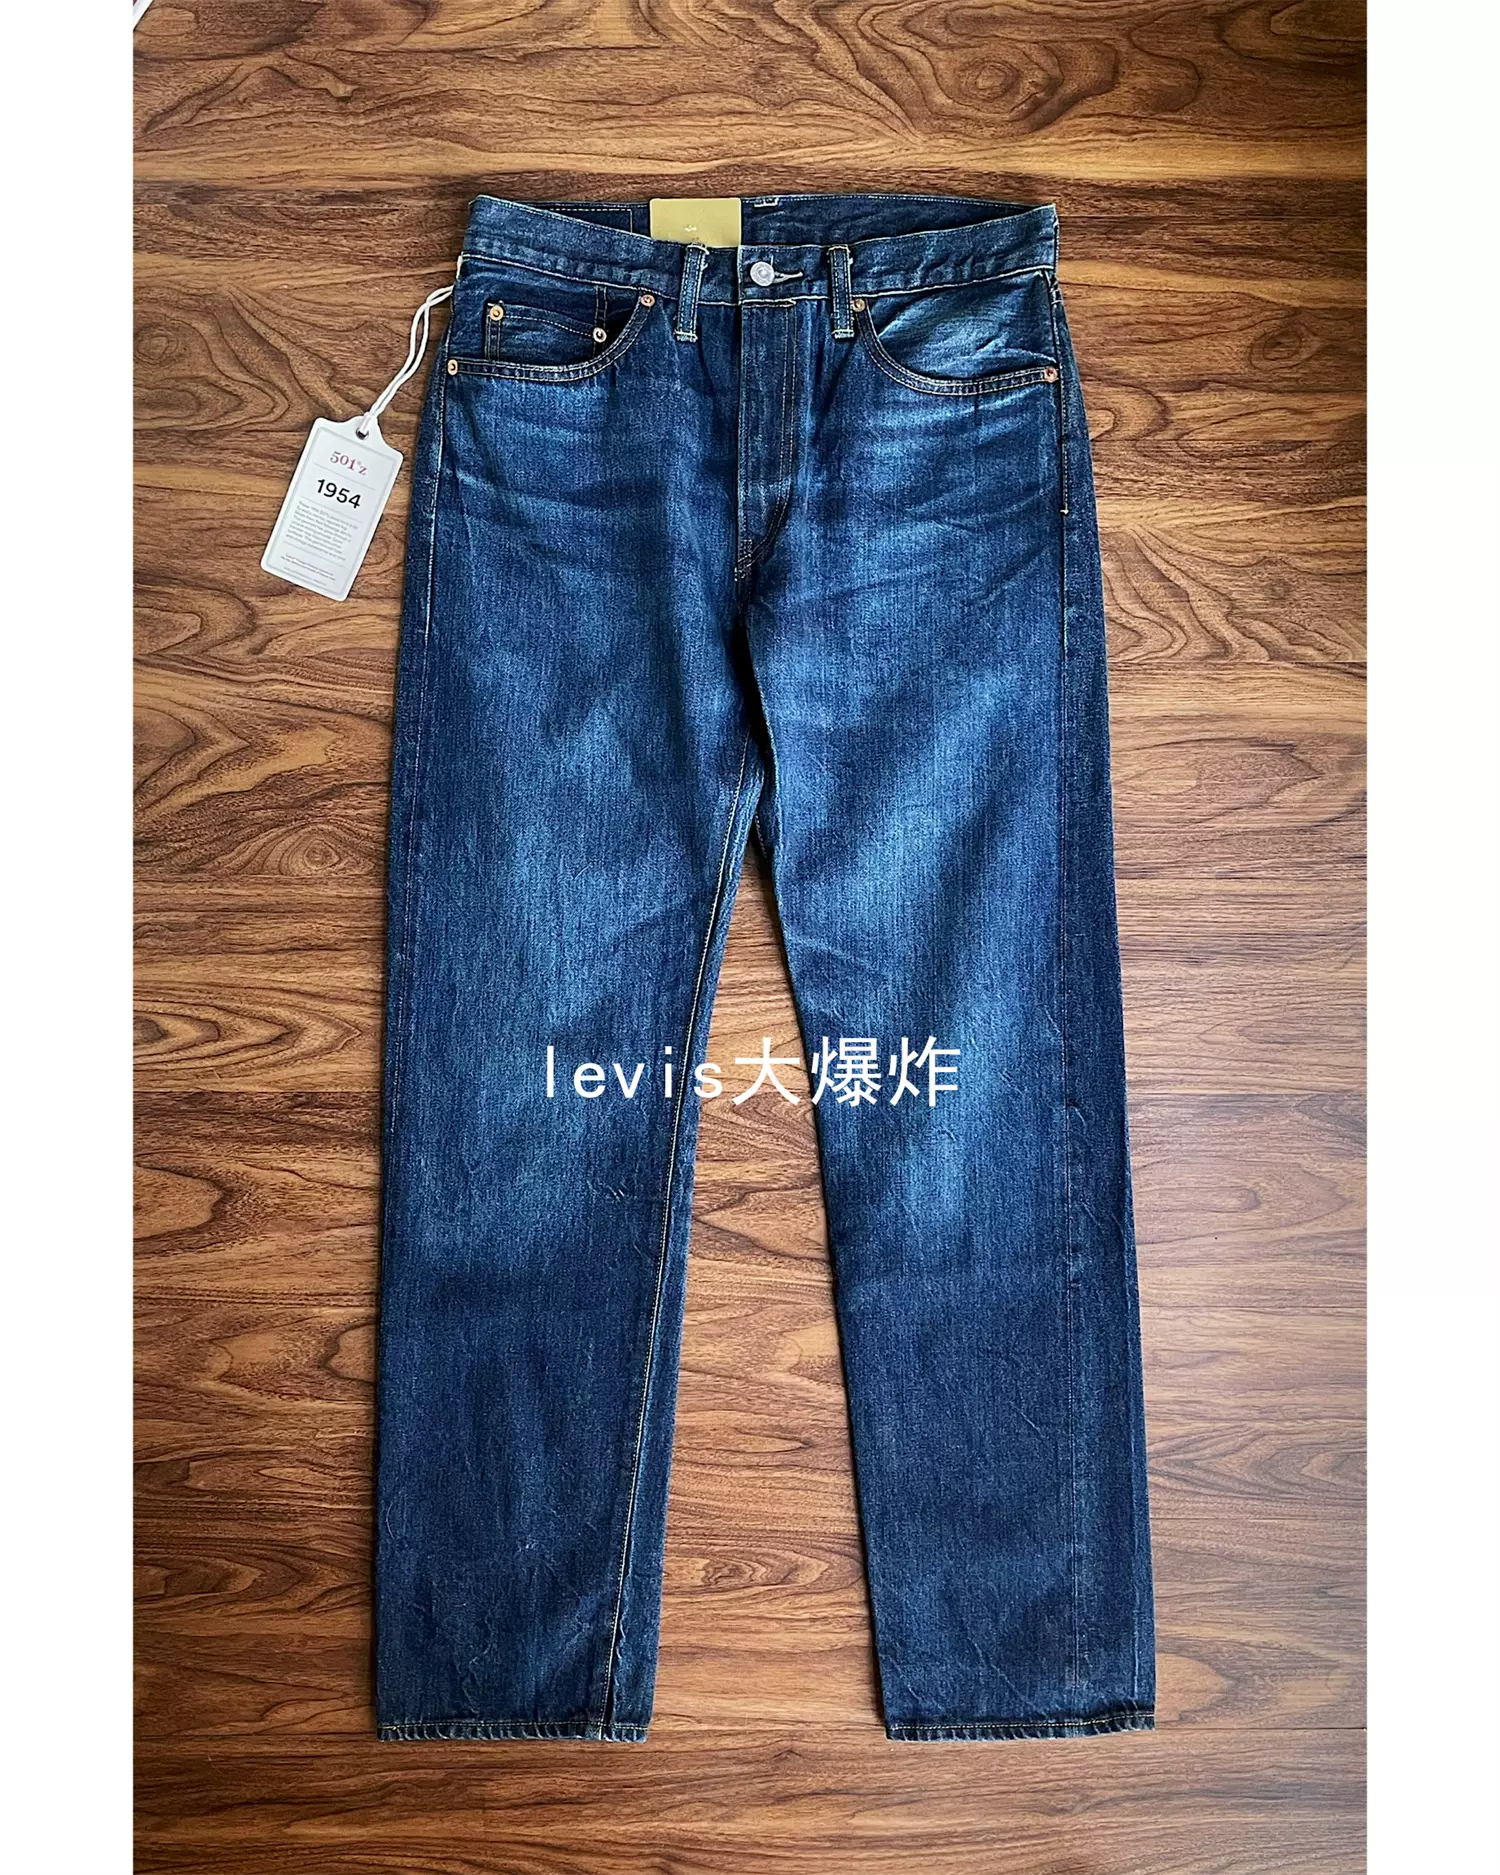 Levis Levi's LVC 1954復古做舊重水洗赤耳修身牛仔褲50154-0088-Taobao